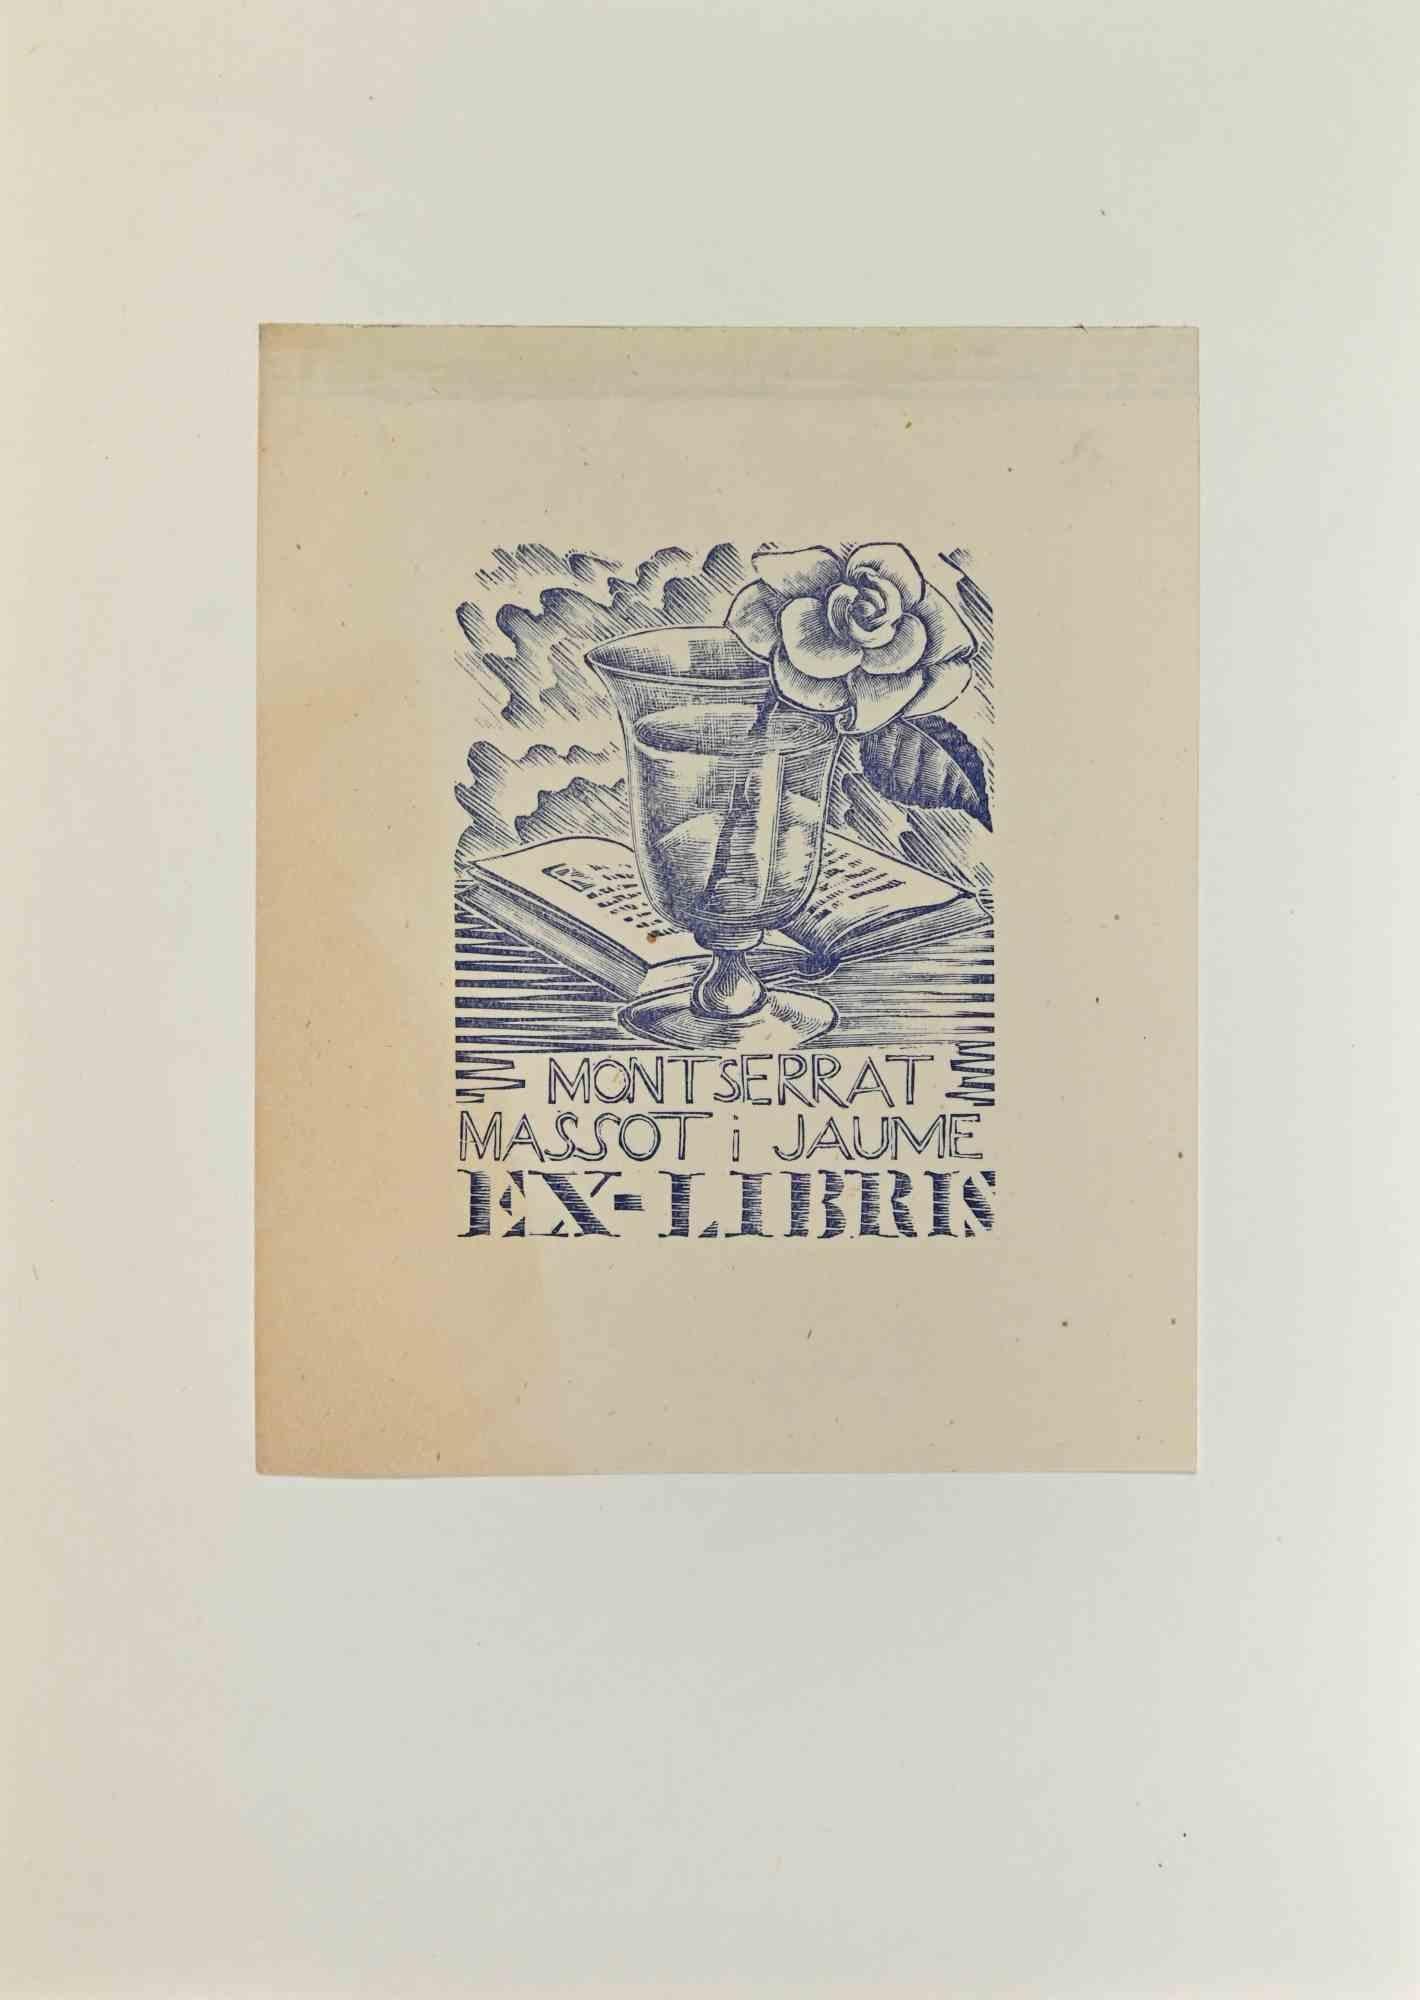 Unknown Figurative Print - Ex-Libris - Montserrat Massot i Jaume - Woodcut - Mid 20th Century